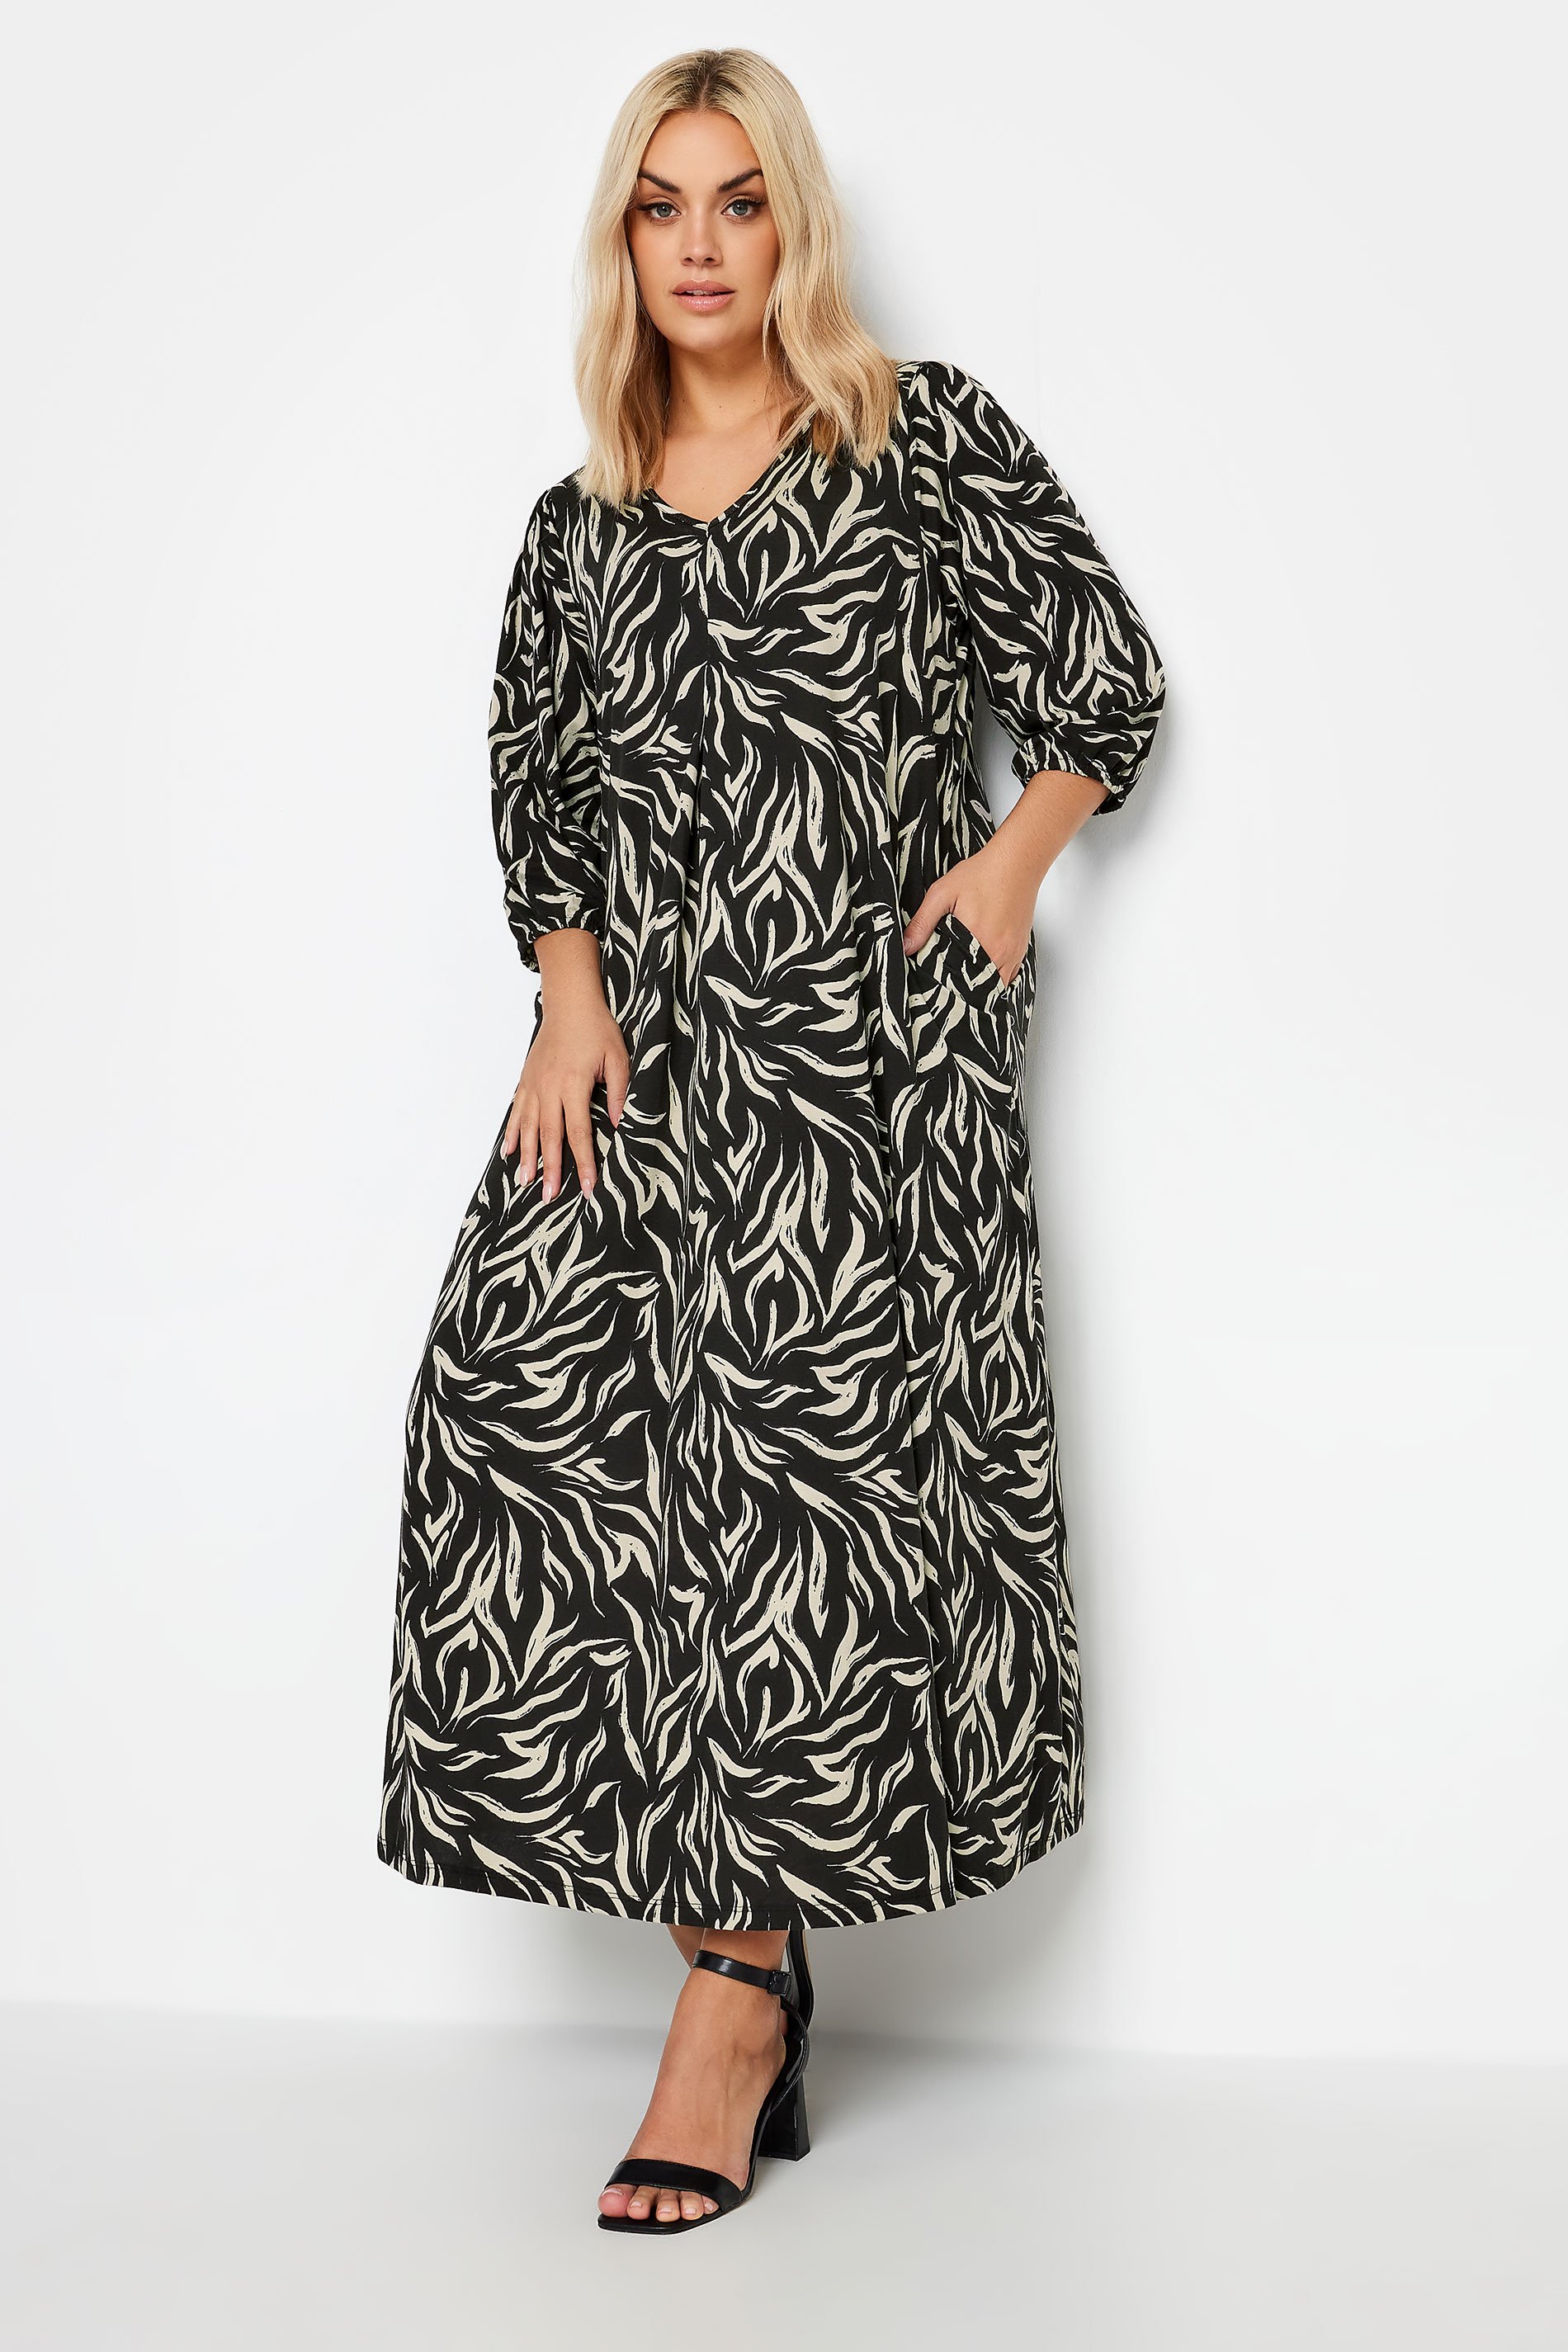 YOURS Plus Size Black Zebra Print Maxi Dress | Yours Clothing 2